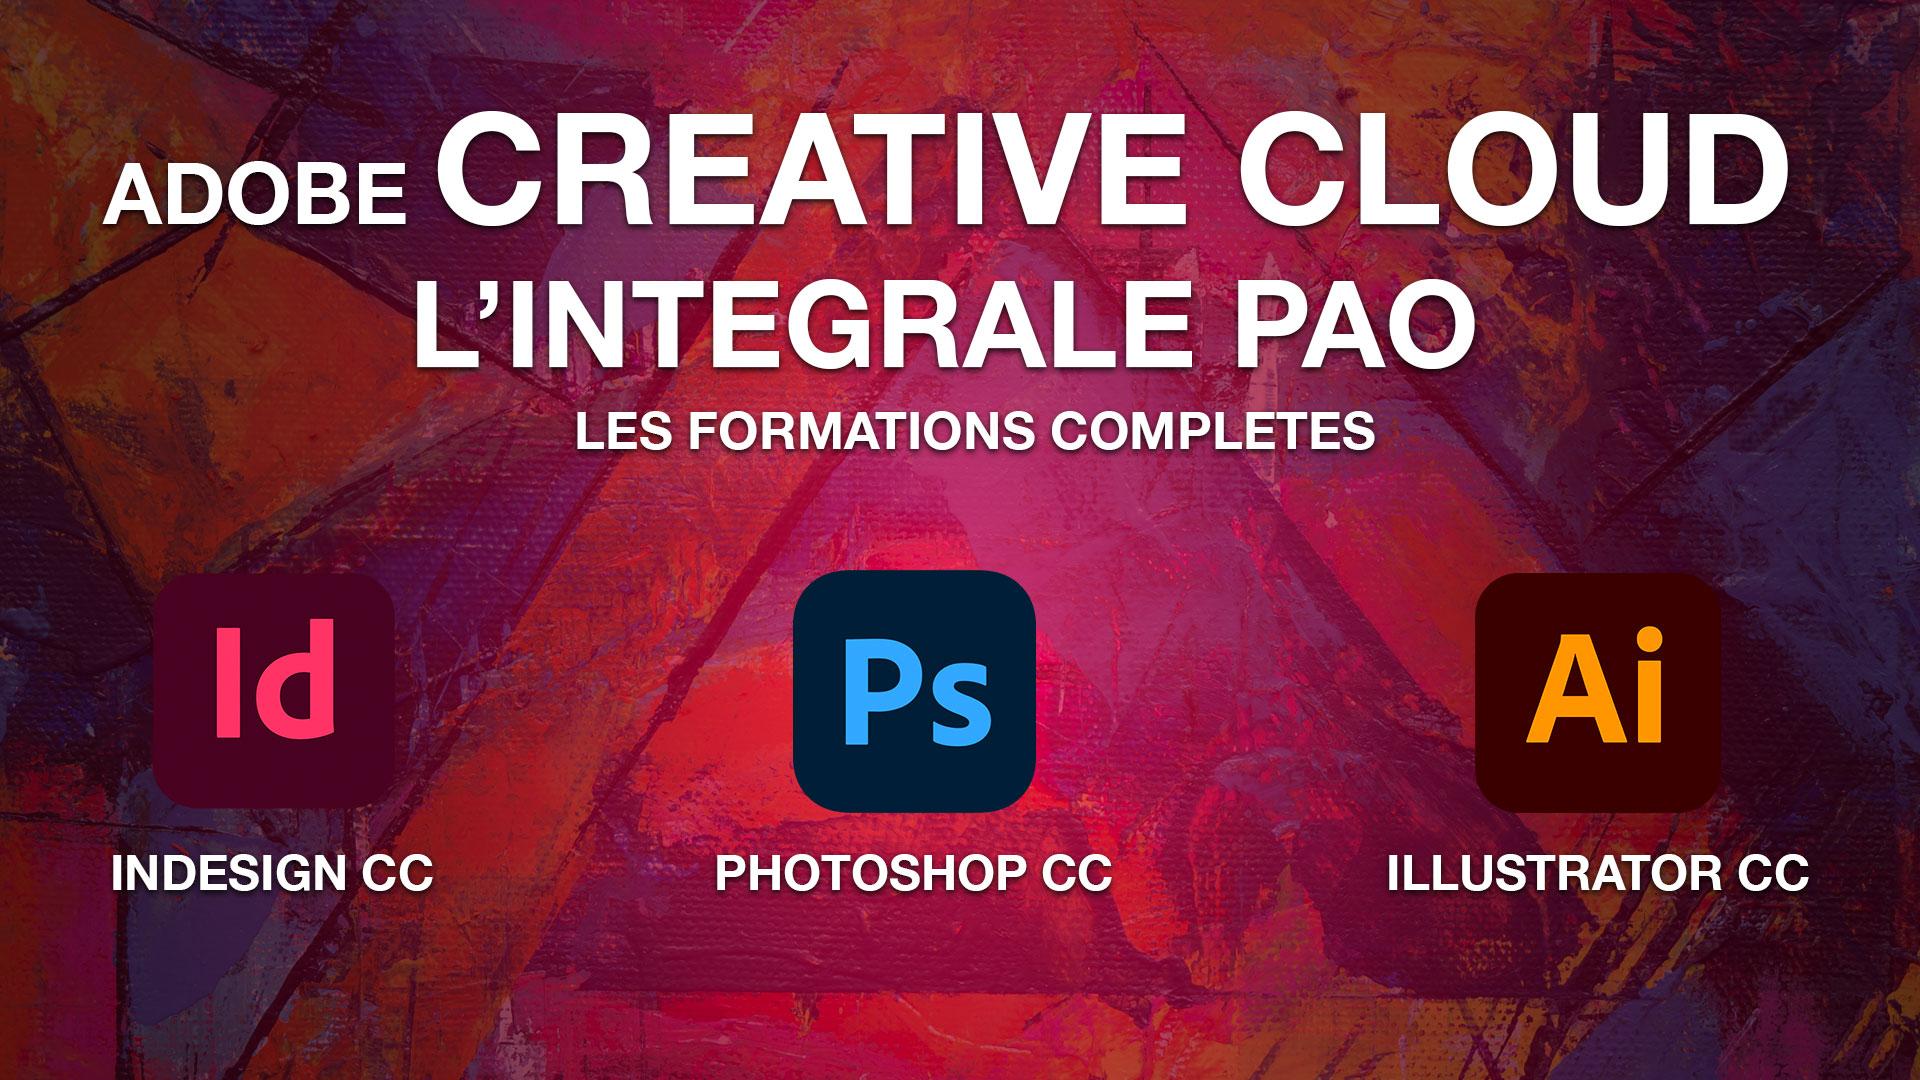 L'intégrale PAO: Adobe Photoshop, Illustrator et Indesign CC